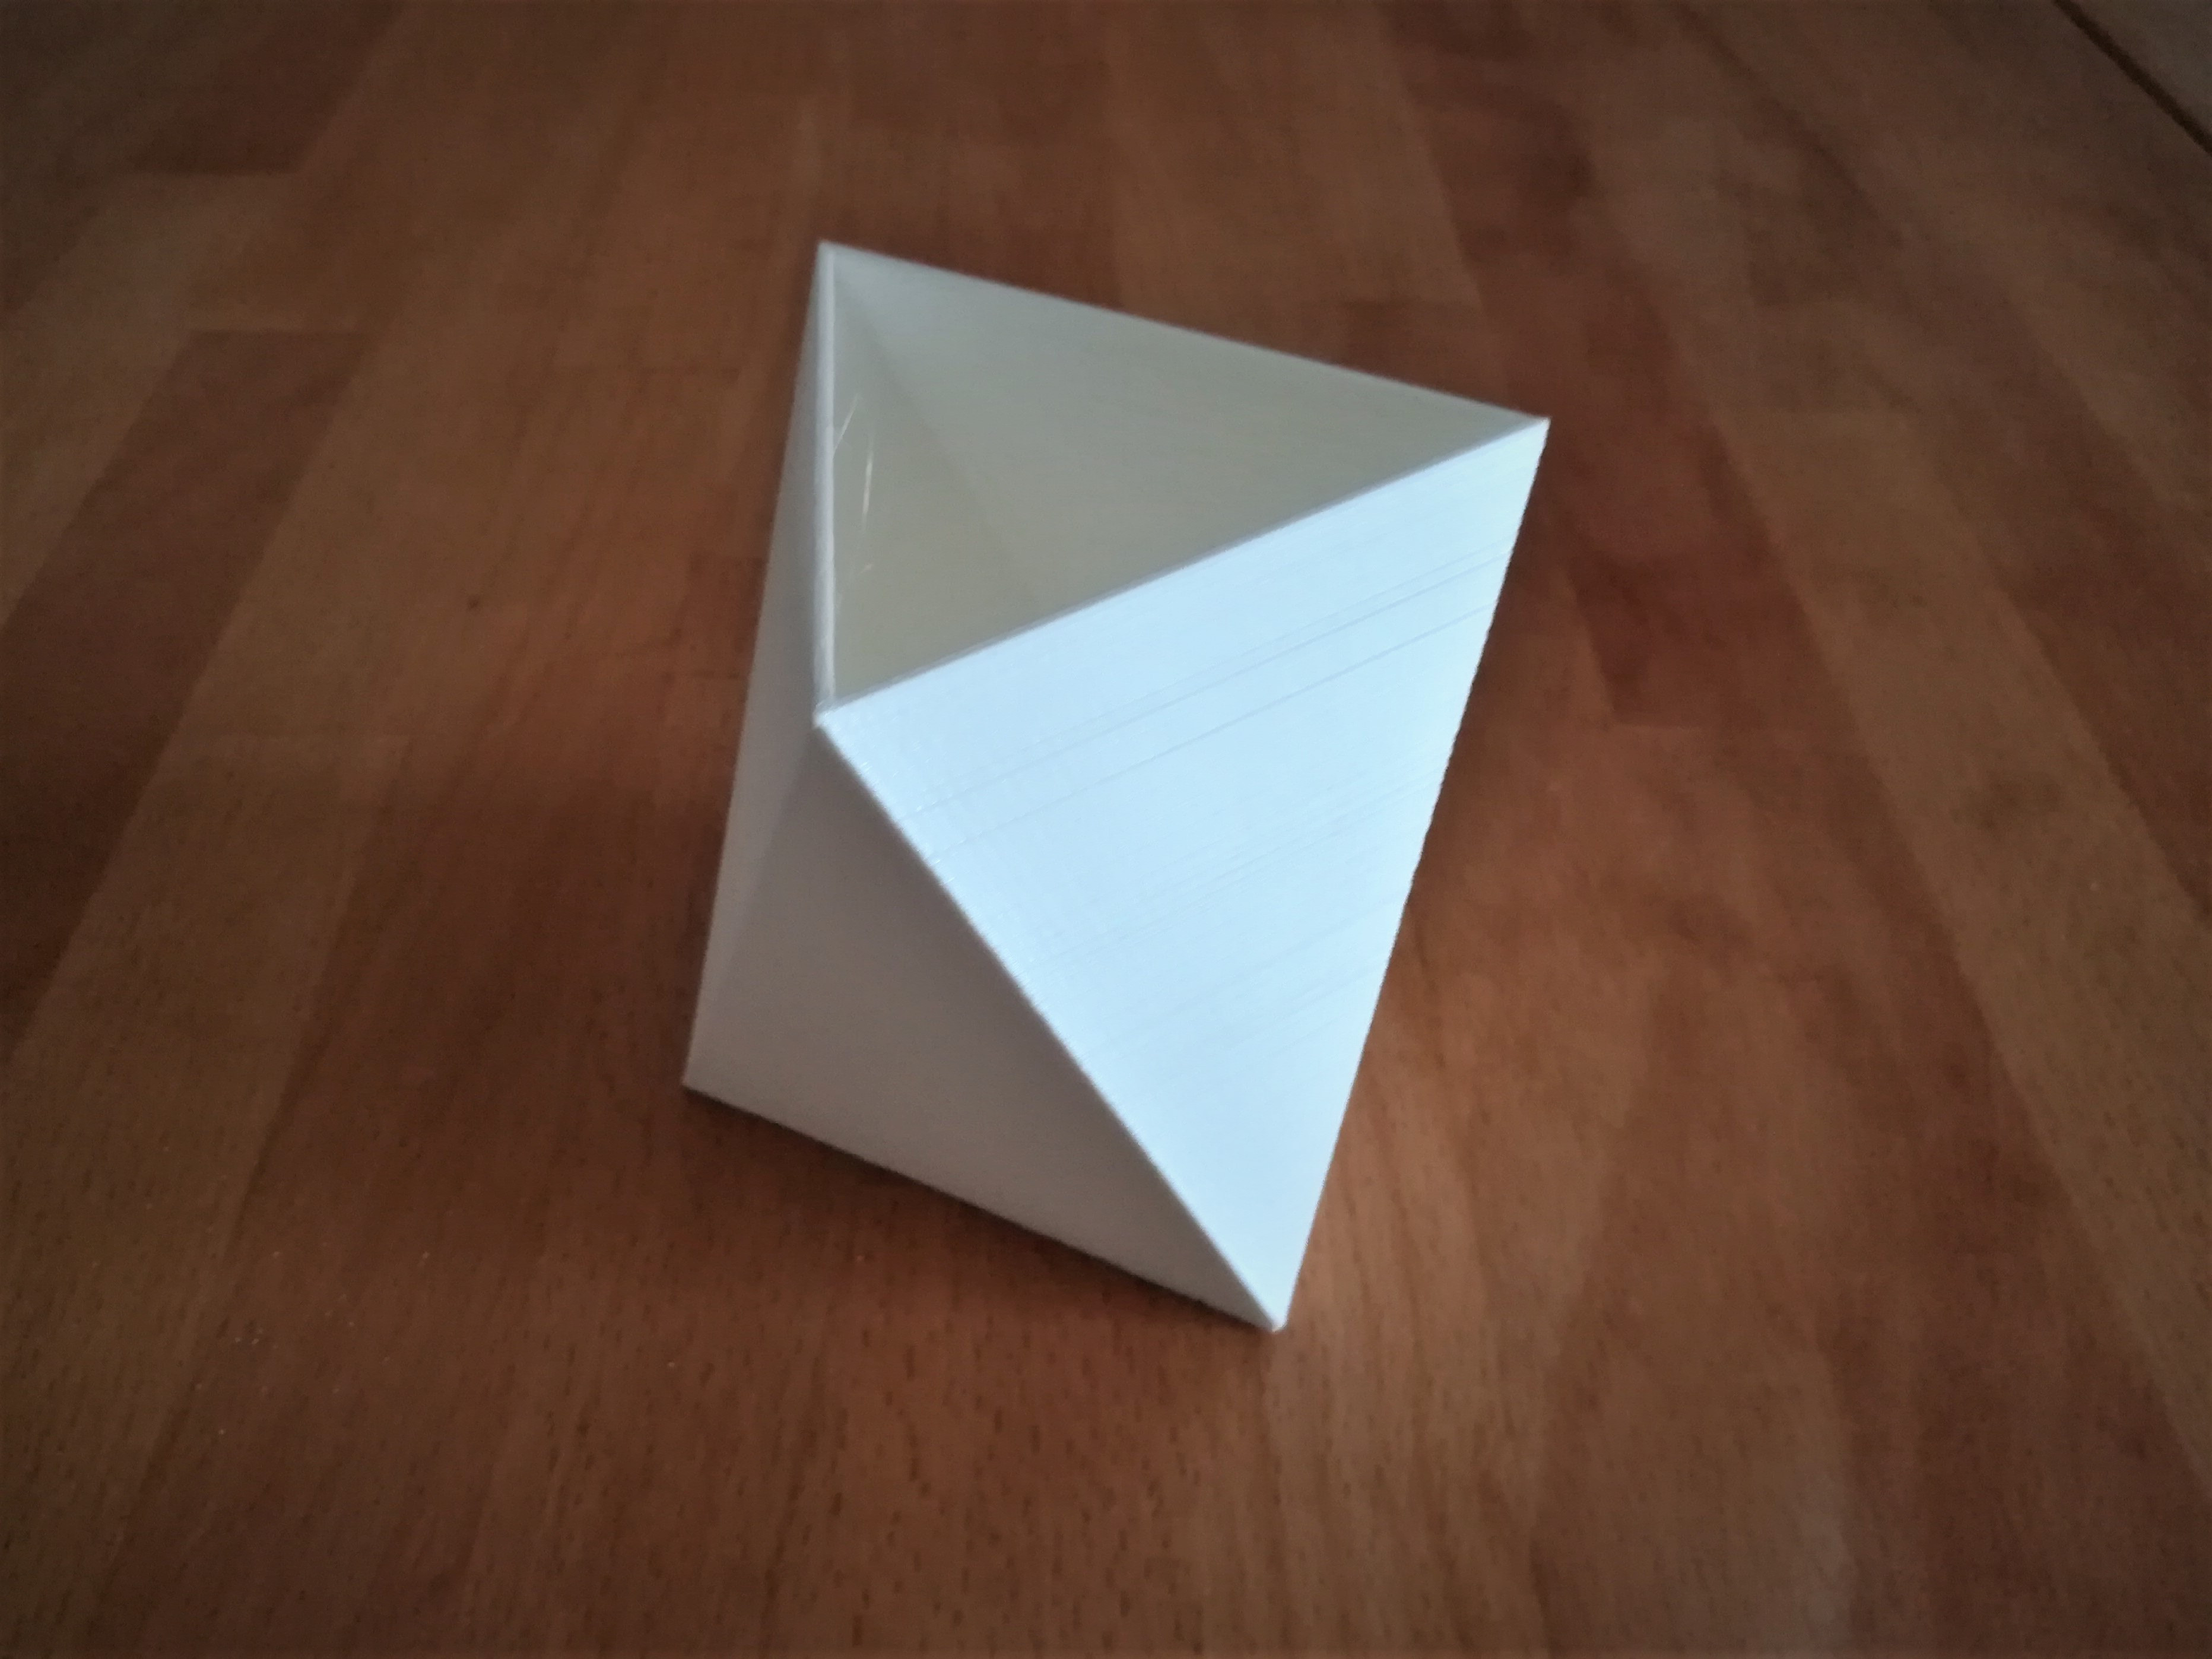 hull art vase of parametric octaedron vase by david l g thingiverse inside by david l g feb 3 2017 view original